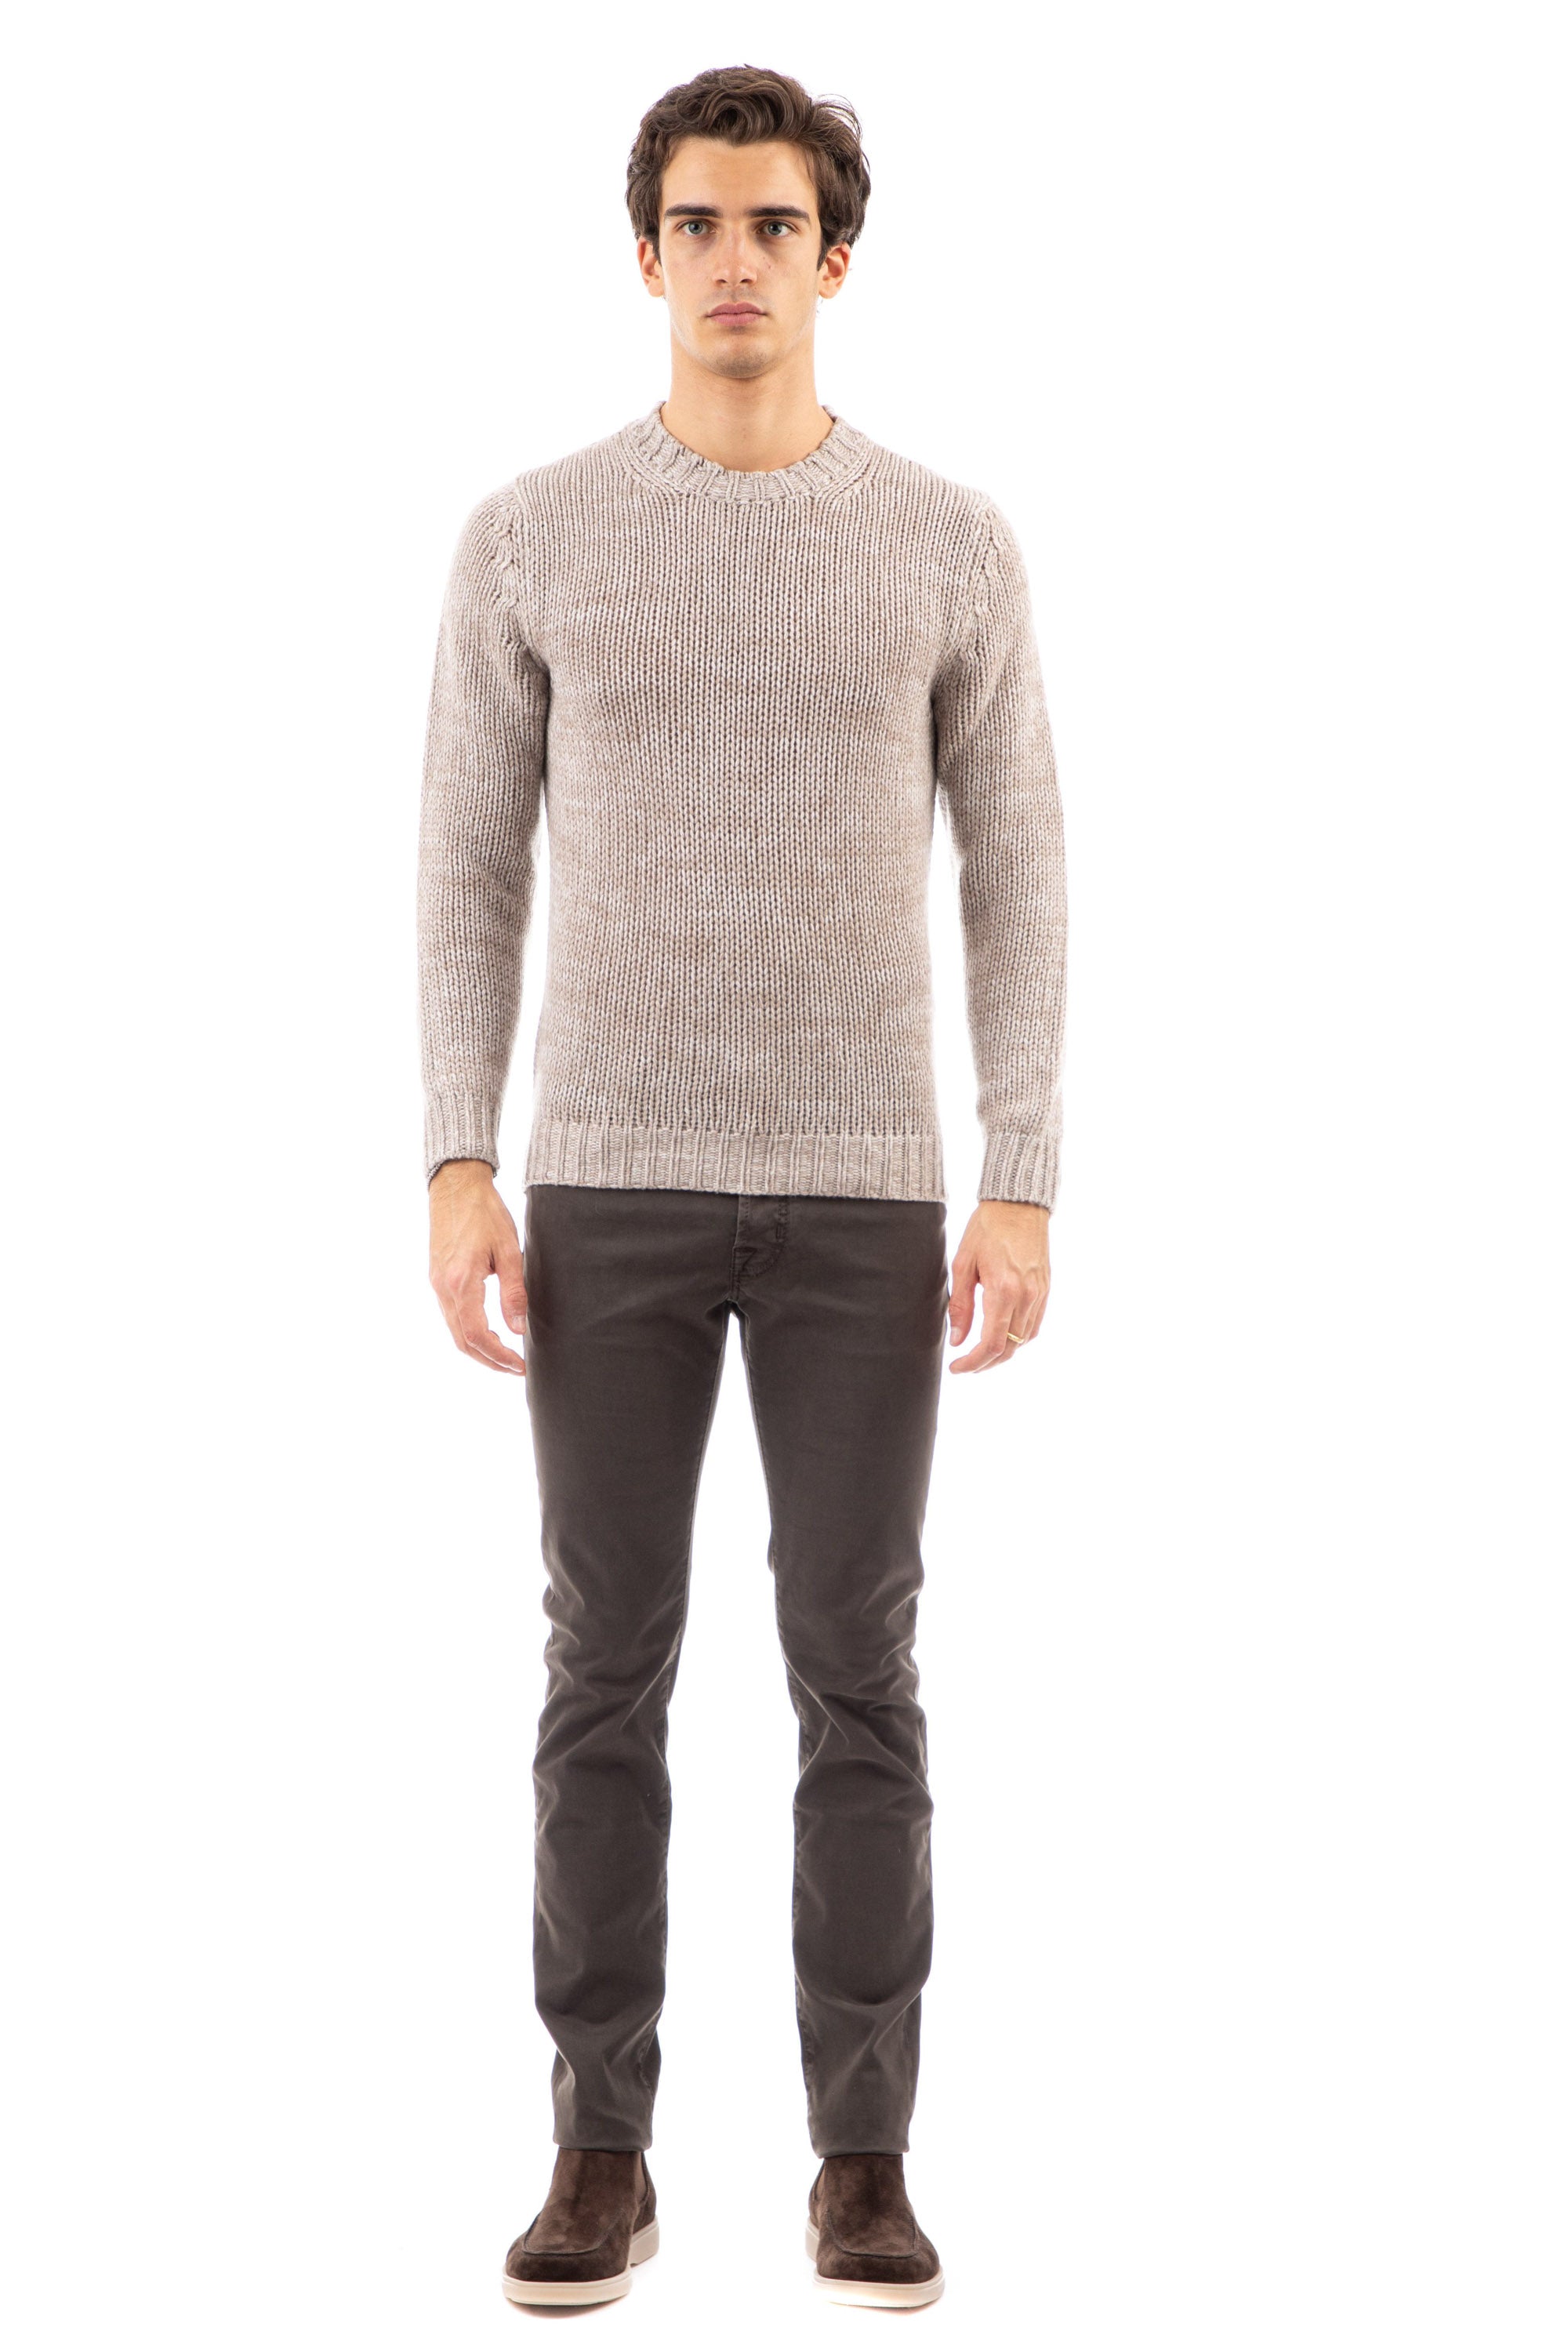 Crew-neck sweater in pure cashmere, gauge 3